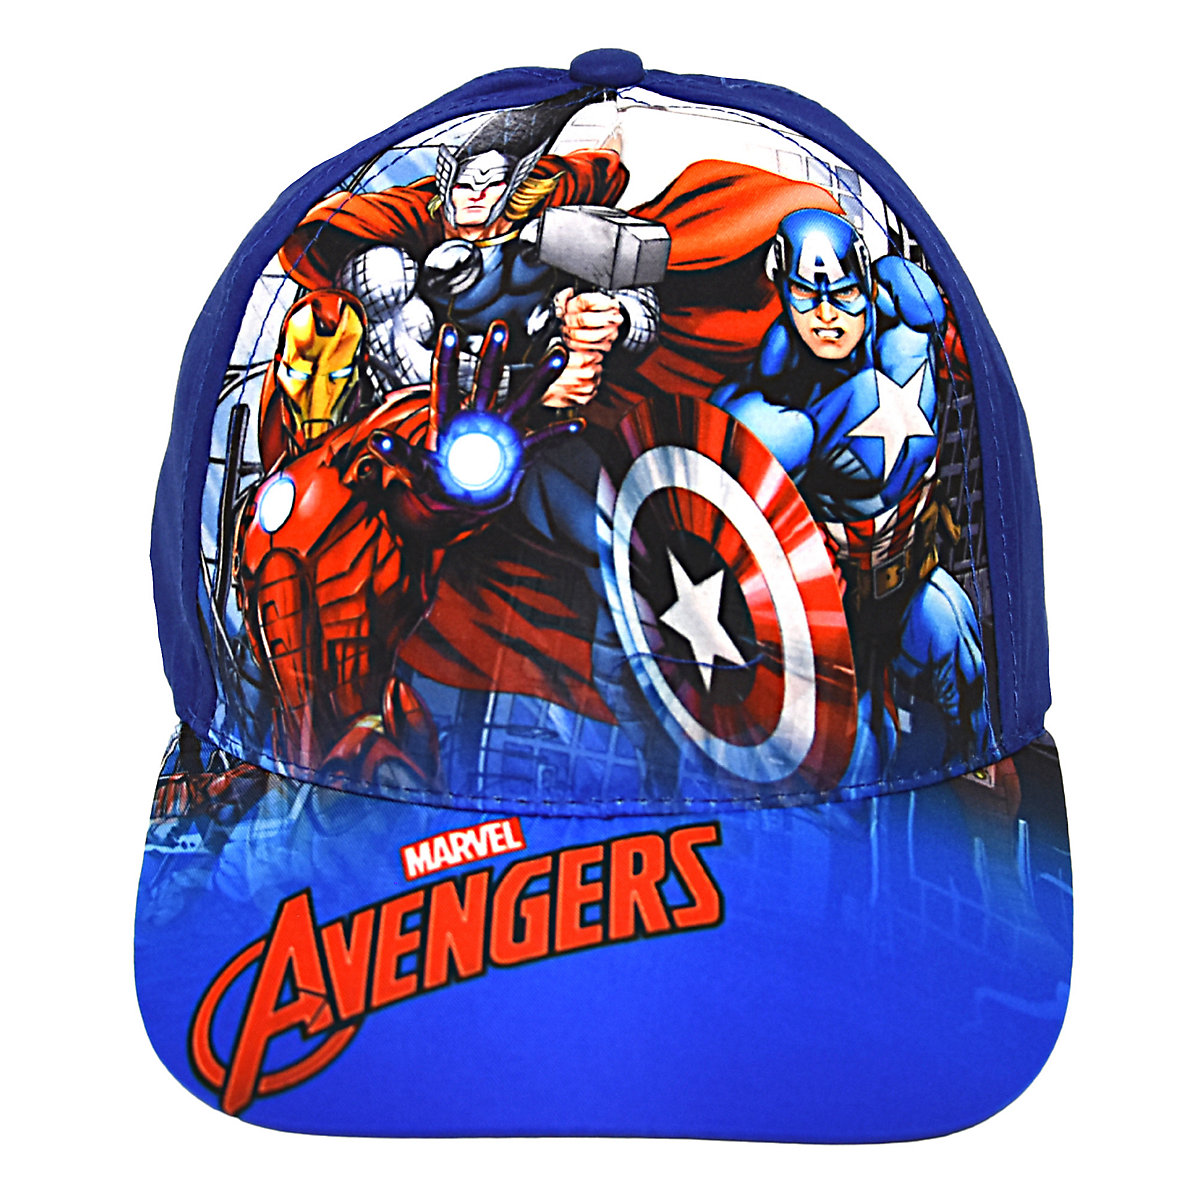 Marvel Avengers Avengers Cap für Jungen mehrfarbig